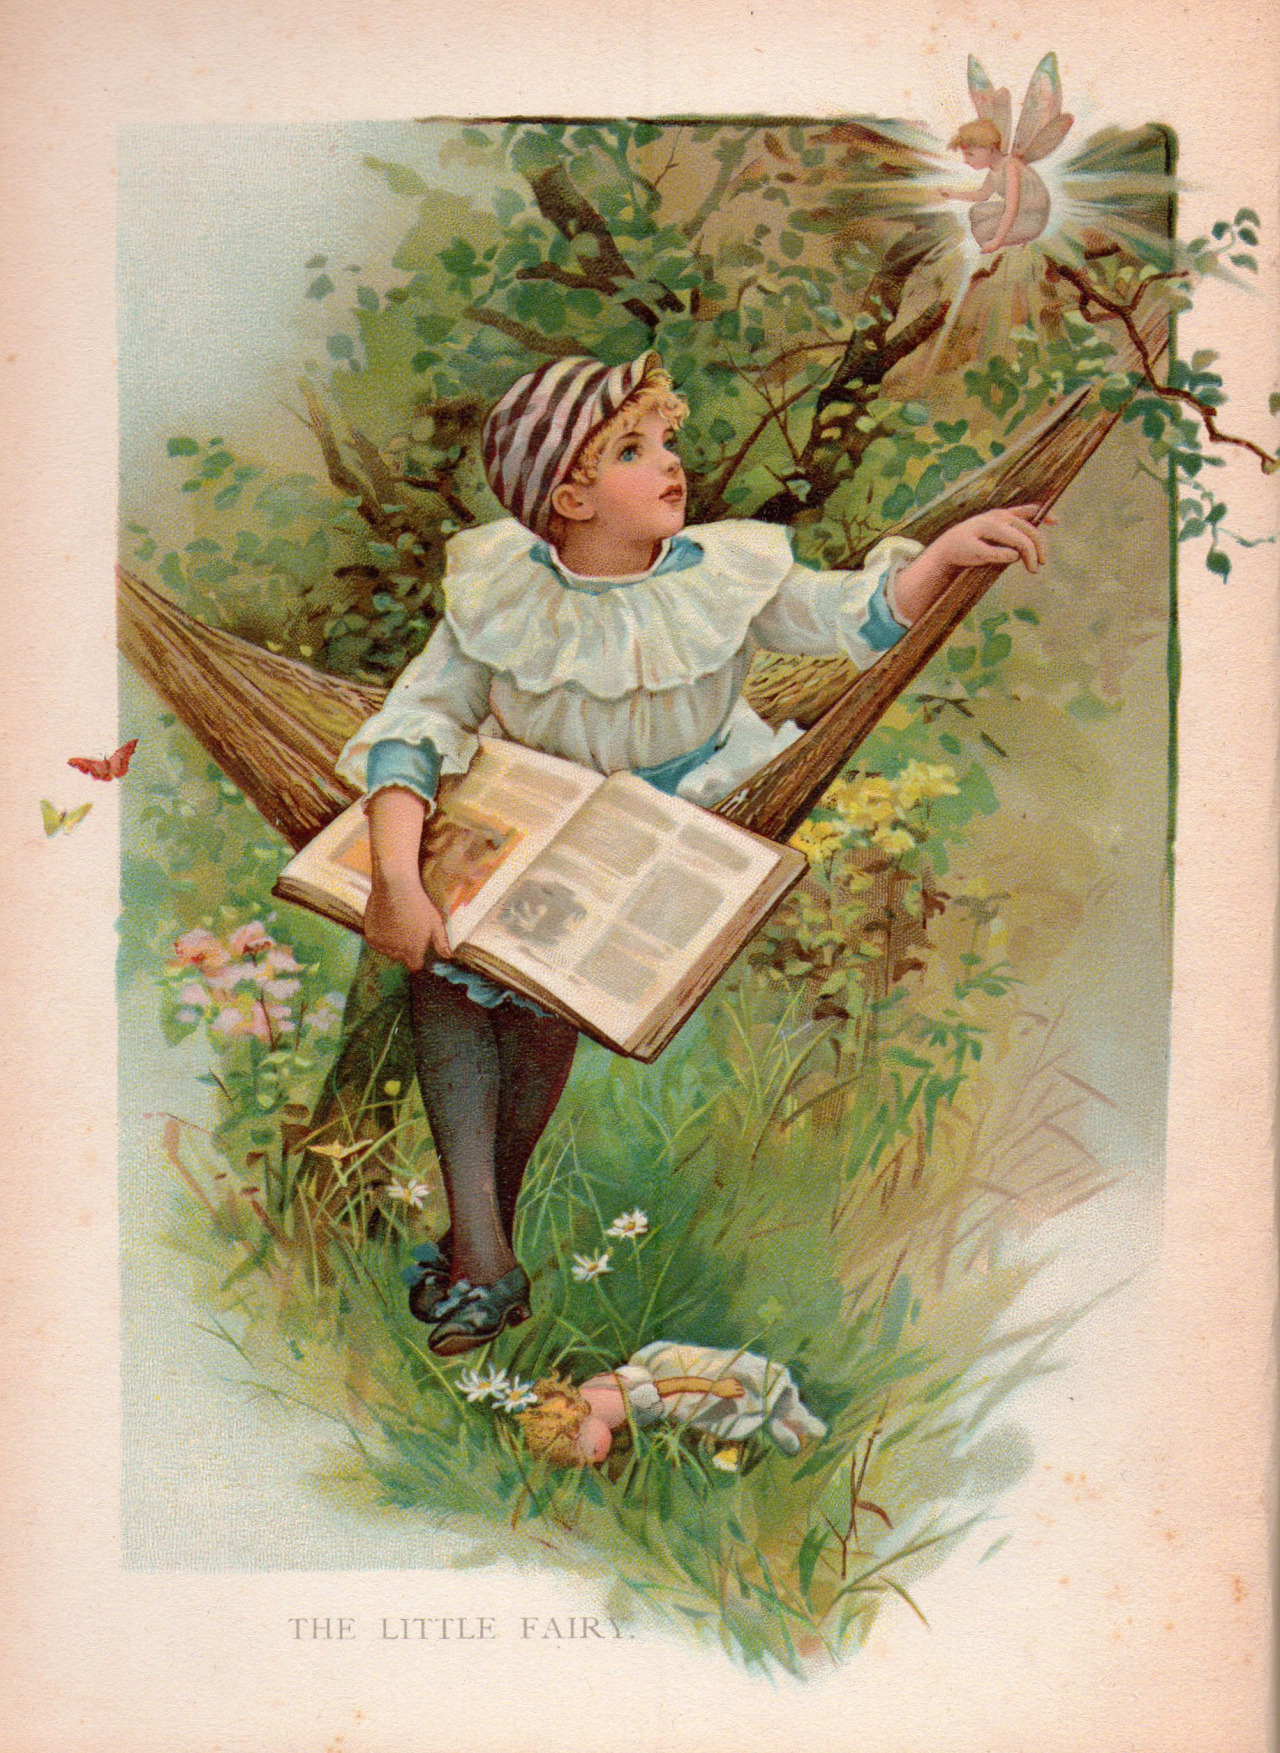 michaelmoonsbookshop:
“ The Little Fairy
19th century chromolithographic illustration
”